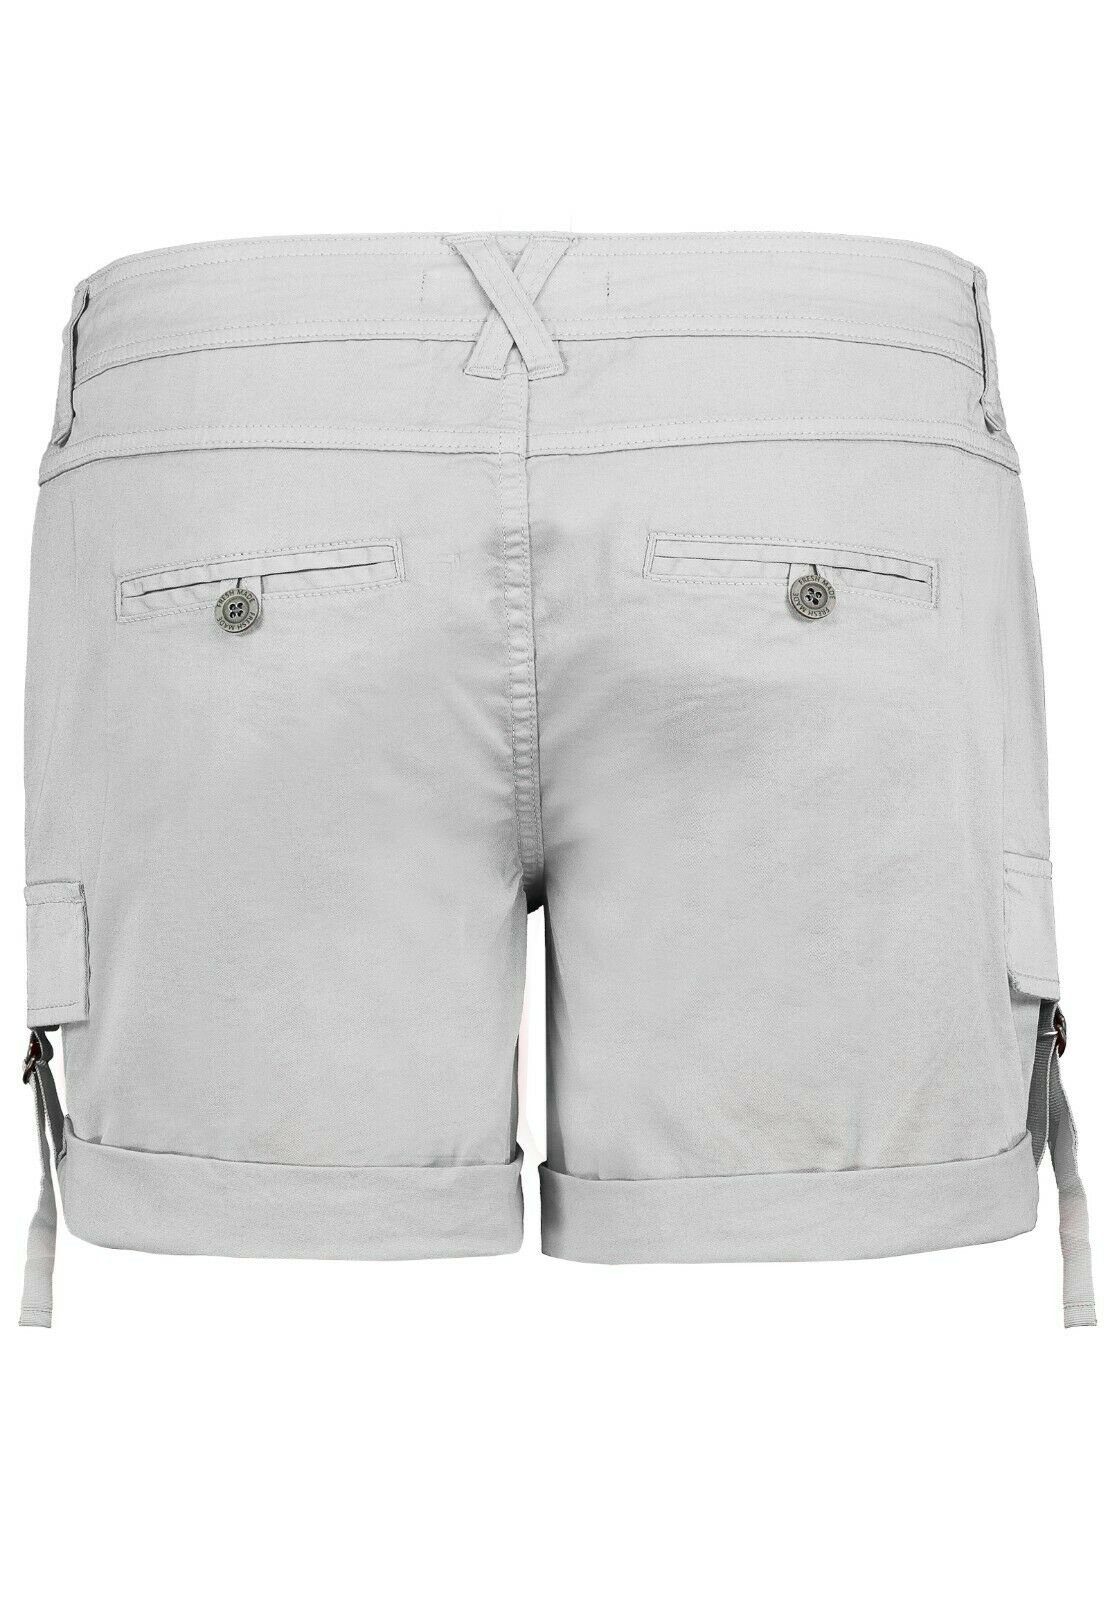 Kurze Grau Fresh Short Bermuda Sommer Hotpants Hose Made Bermudas Shorts